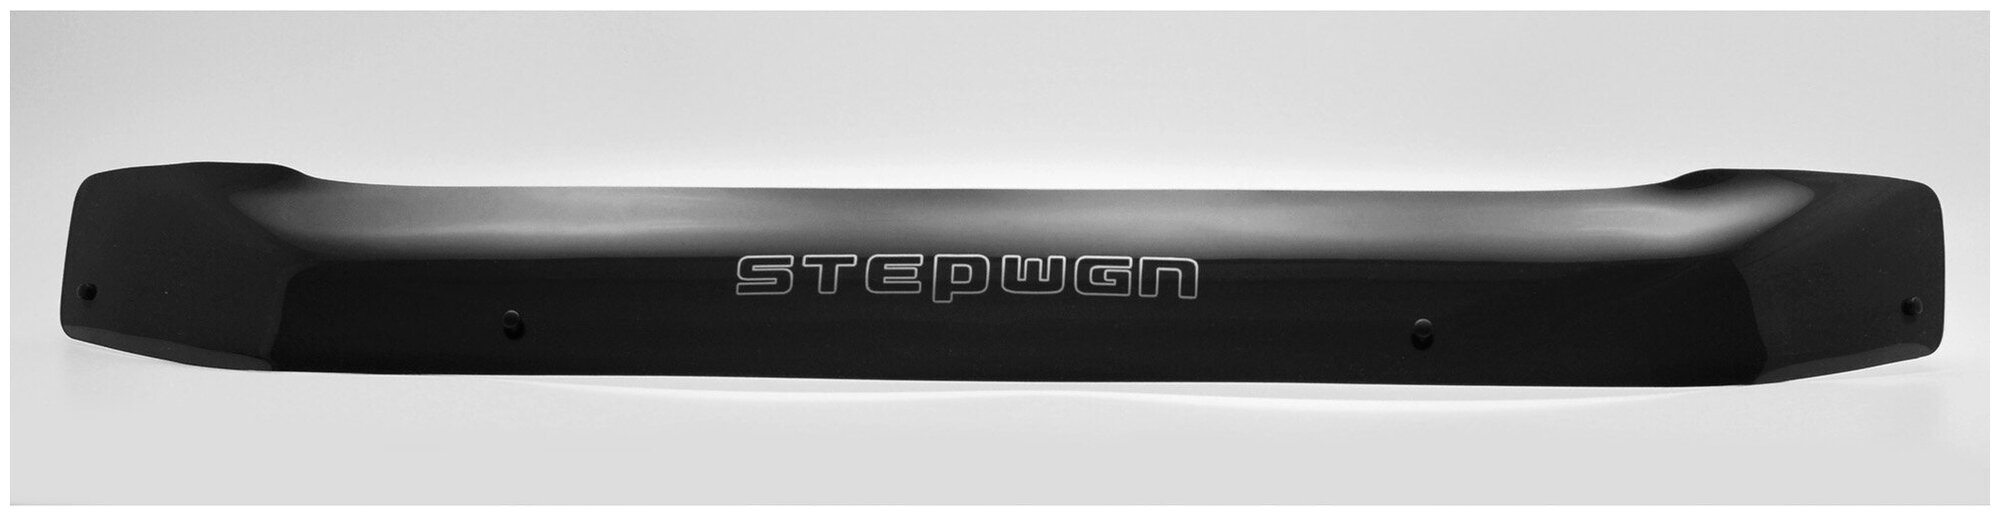 Defly Дефлектор капота Honda Stepwgn, 2001-2005